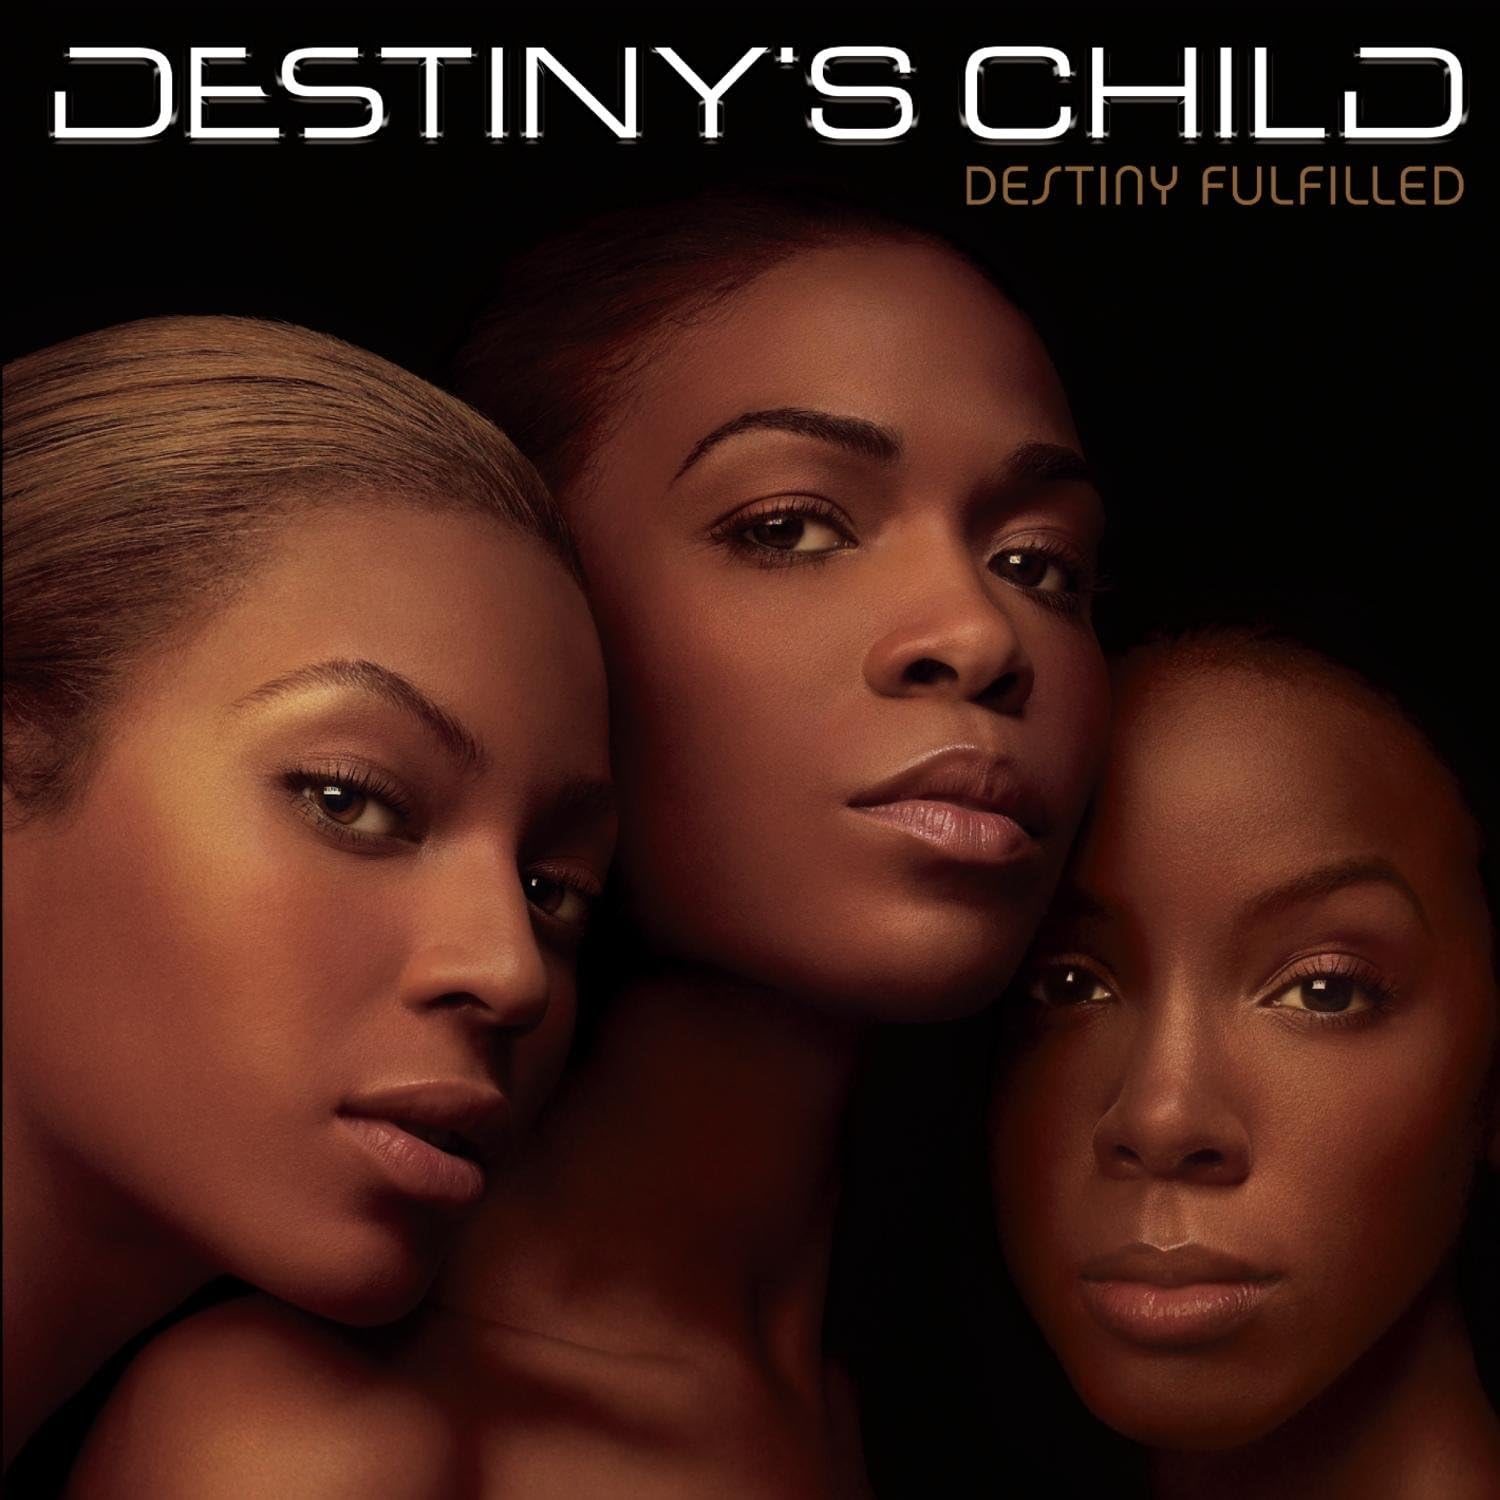 alt="Destiny's Child - Destiny Fulfilled (2004, Columbia Records/Sony Urban) COVER"